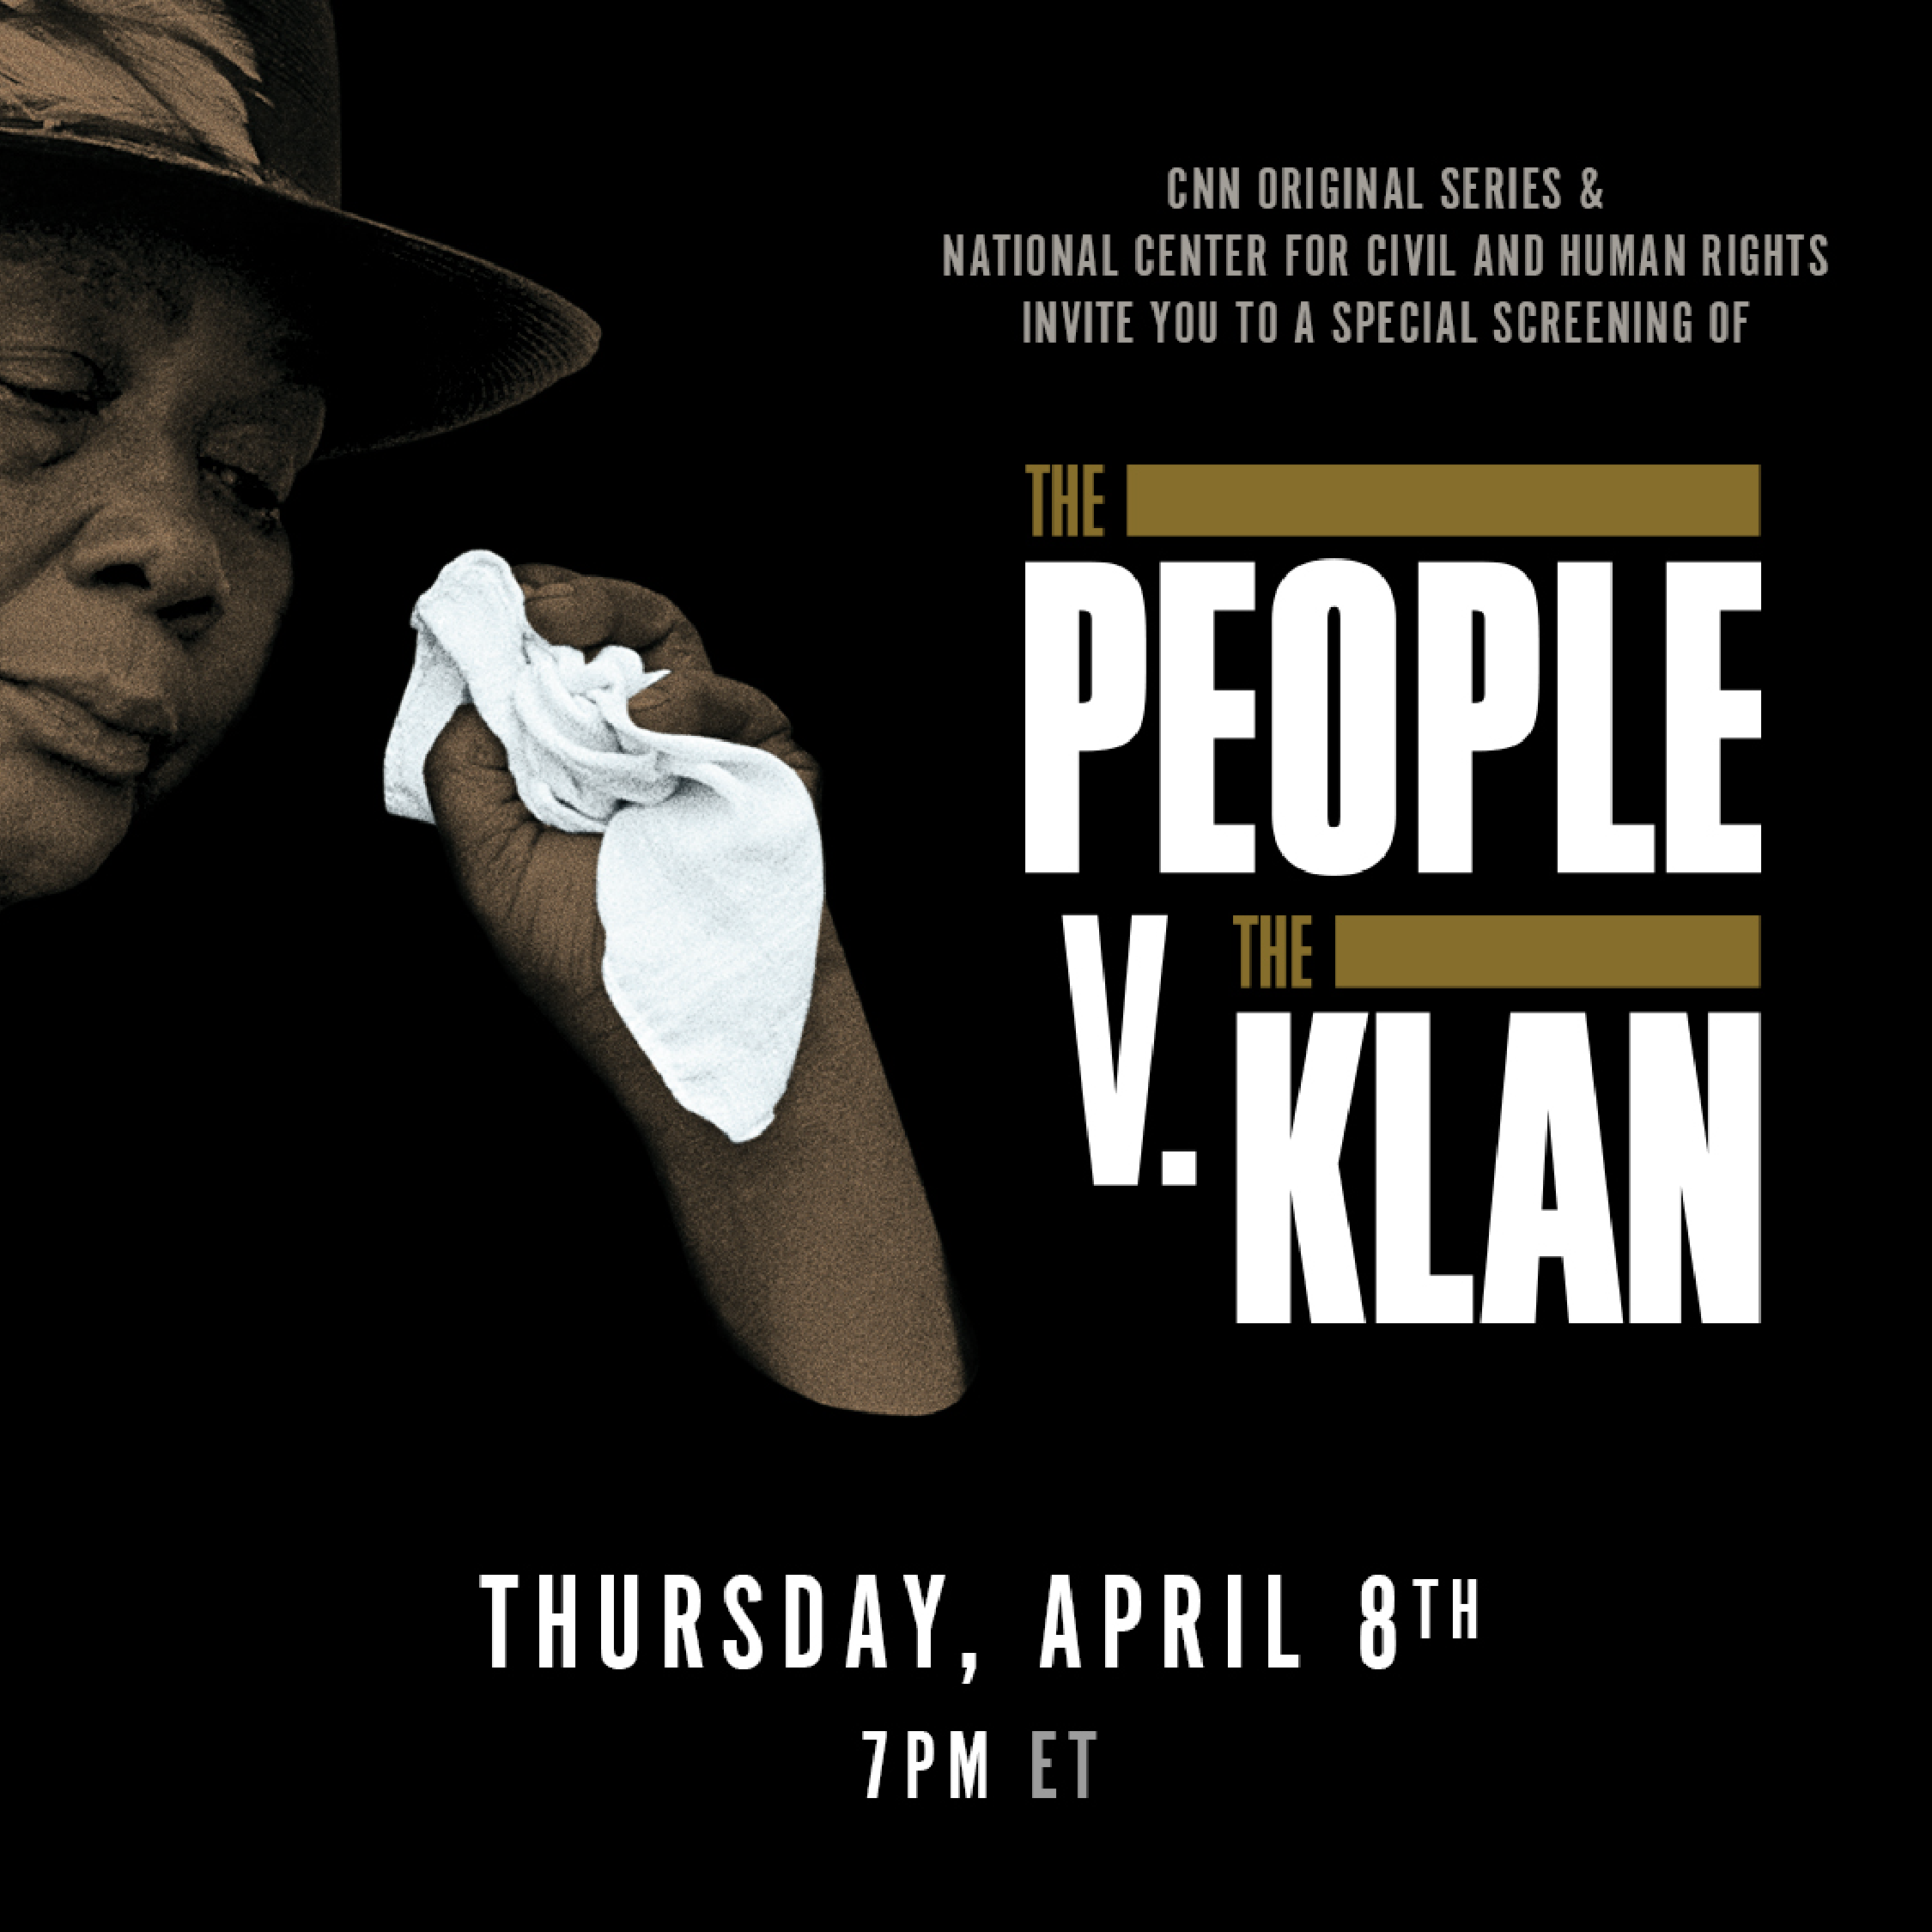 The People v. The Klan